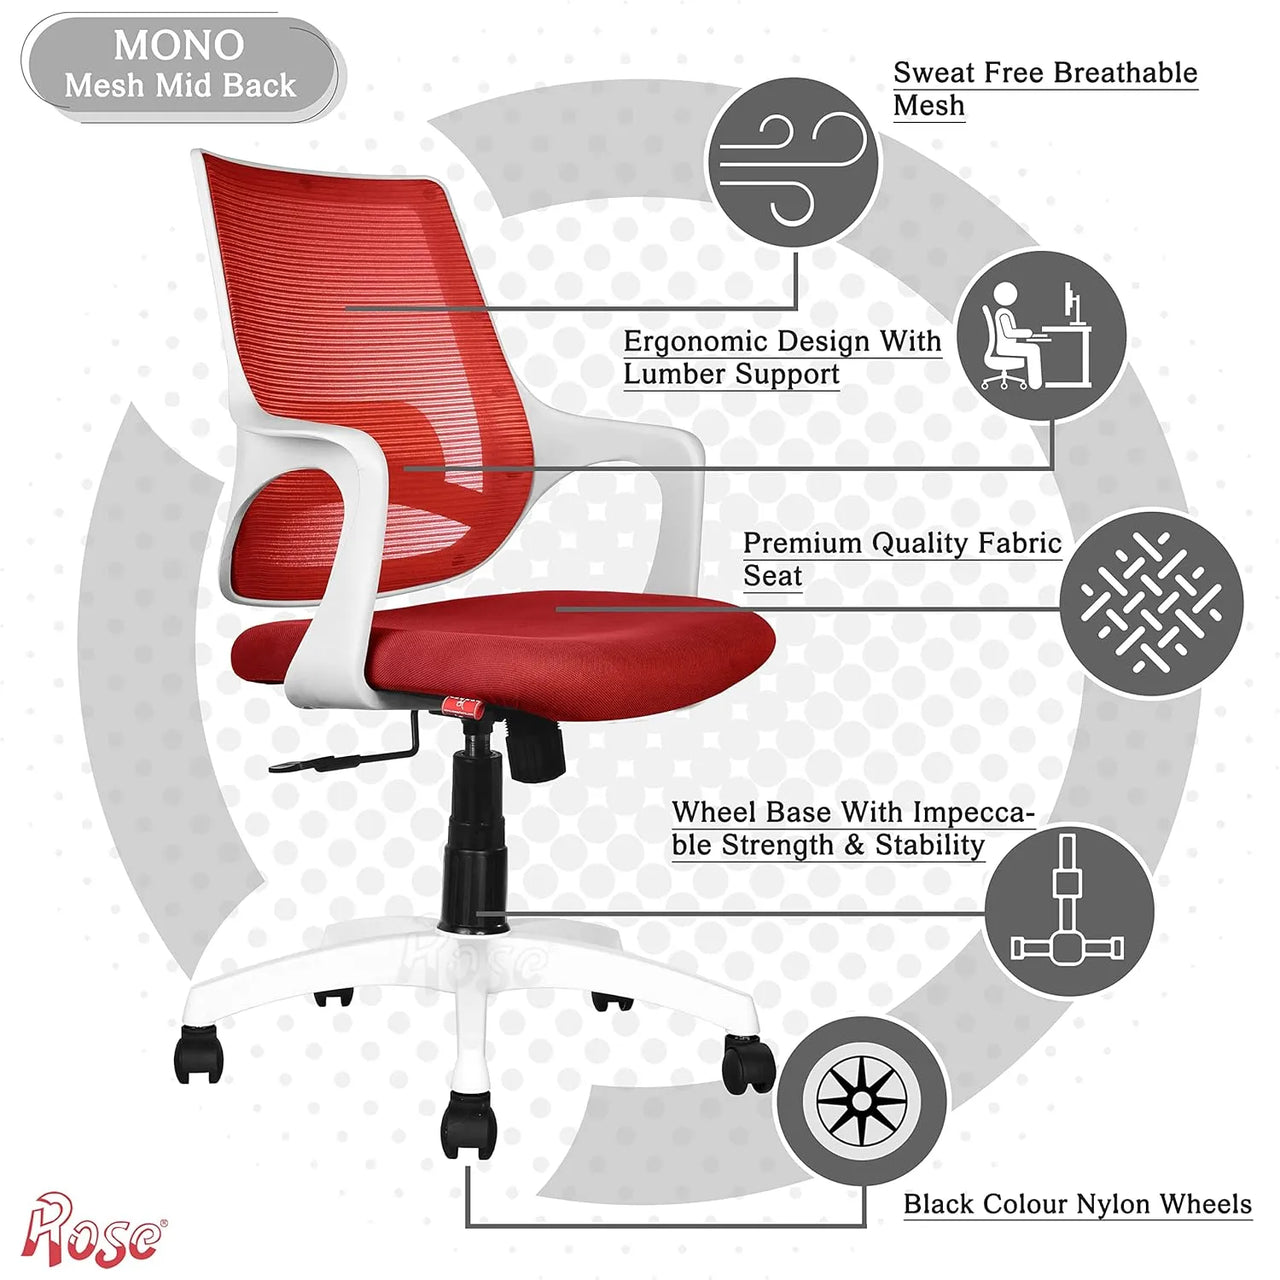 Mono Mesh Mid-Back Ergonomic Office Chair (White & Red)